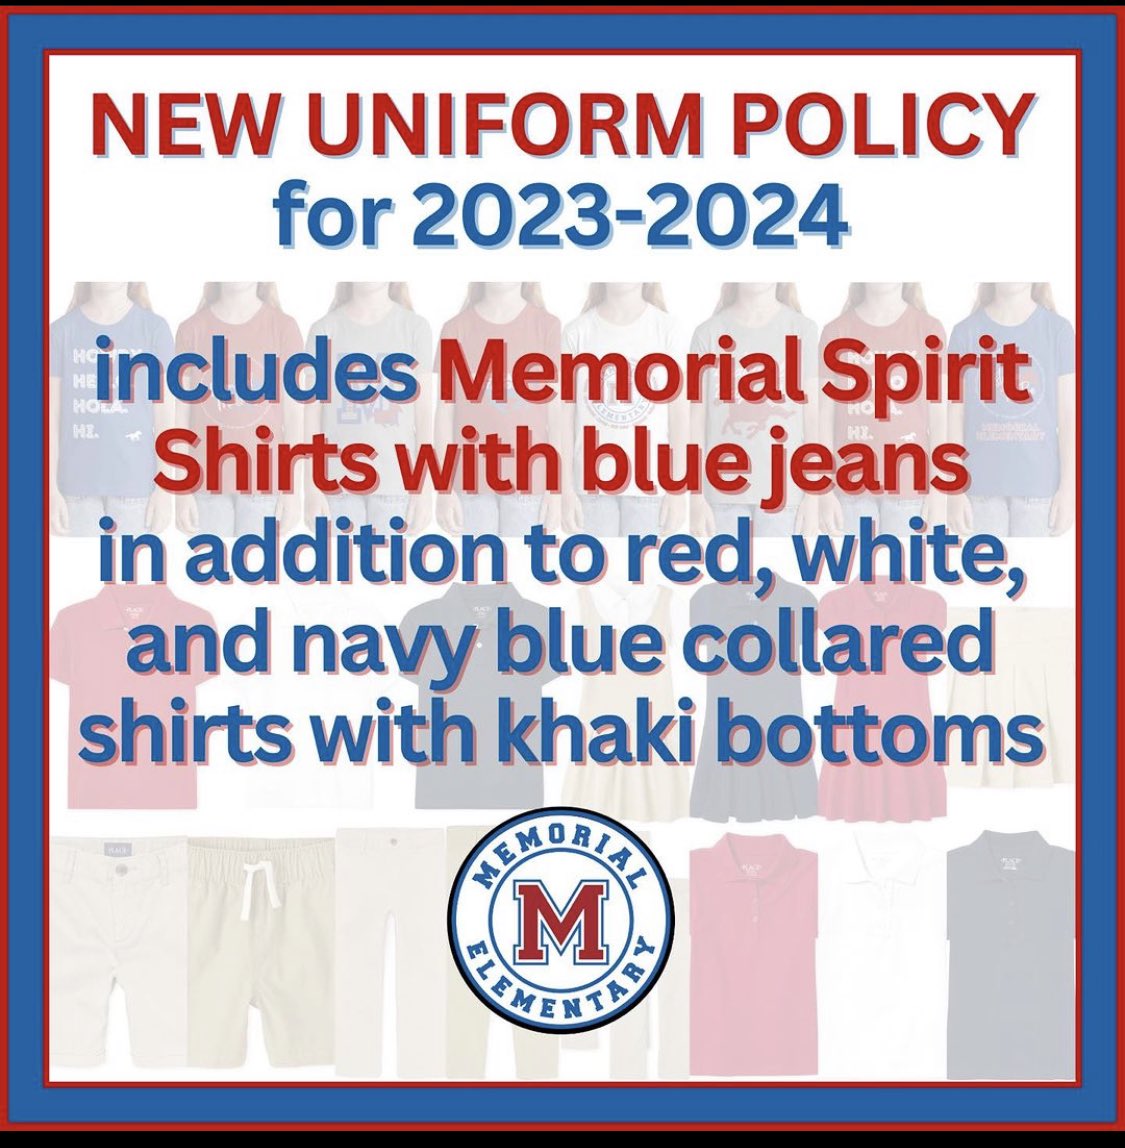 Memorial’s 23-24 Uniform Policy to include Memorial spirit shirts! @MemorialElm